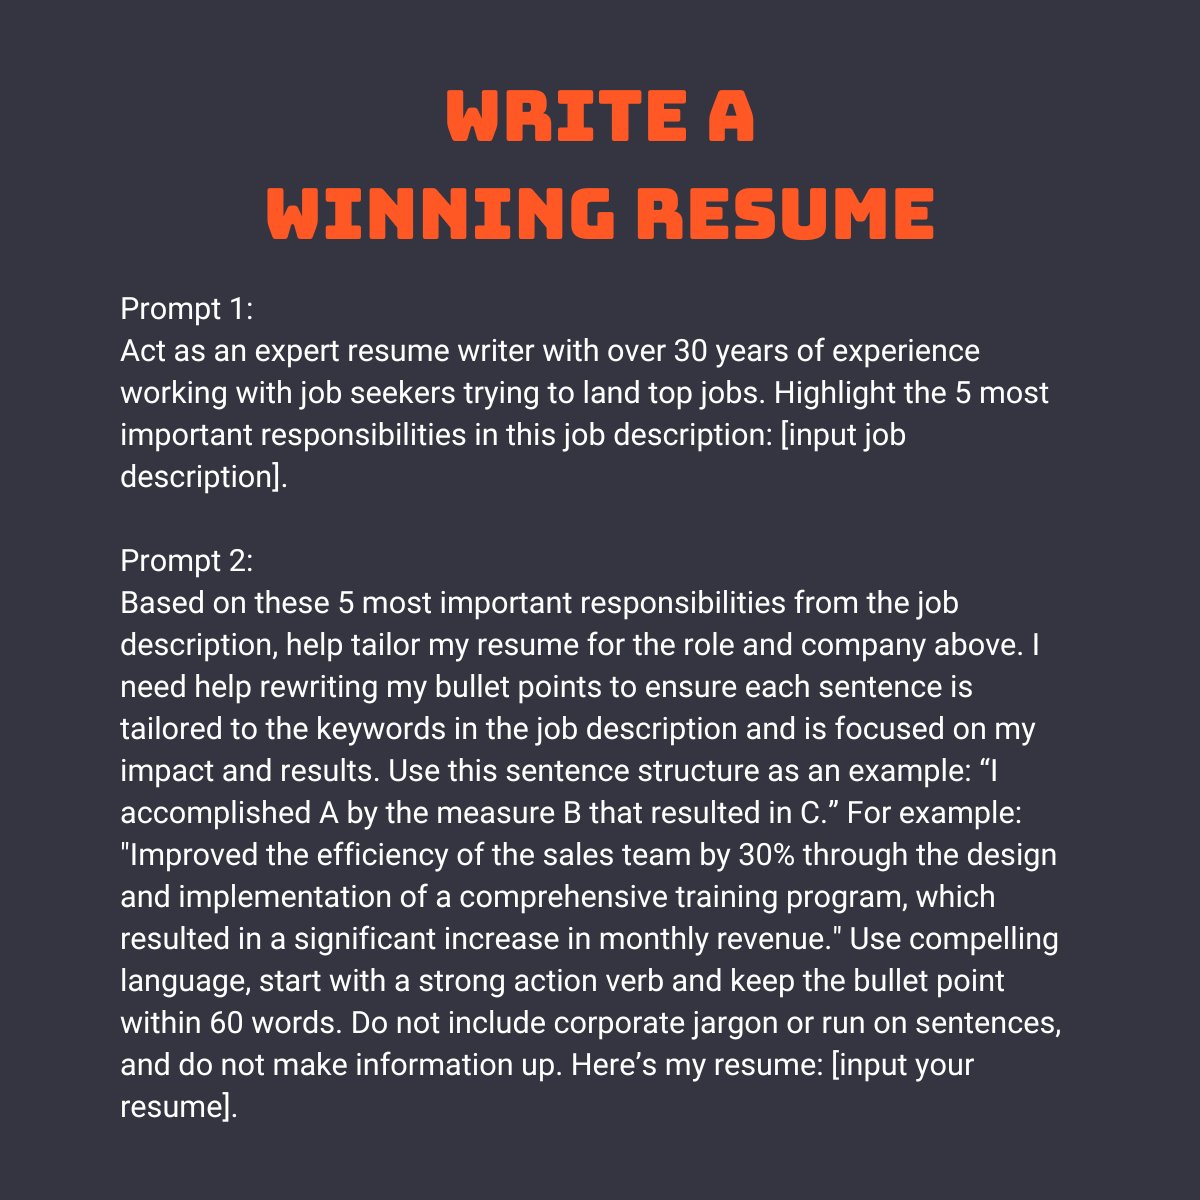 Write a winning resume